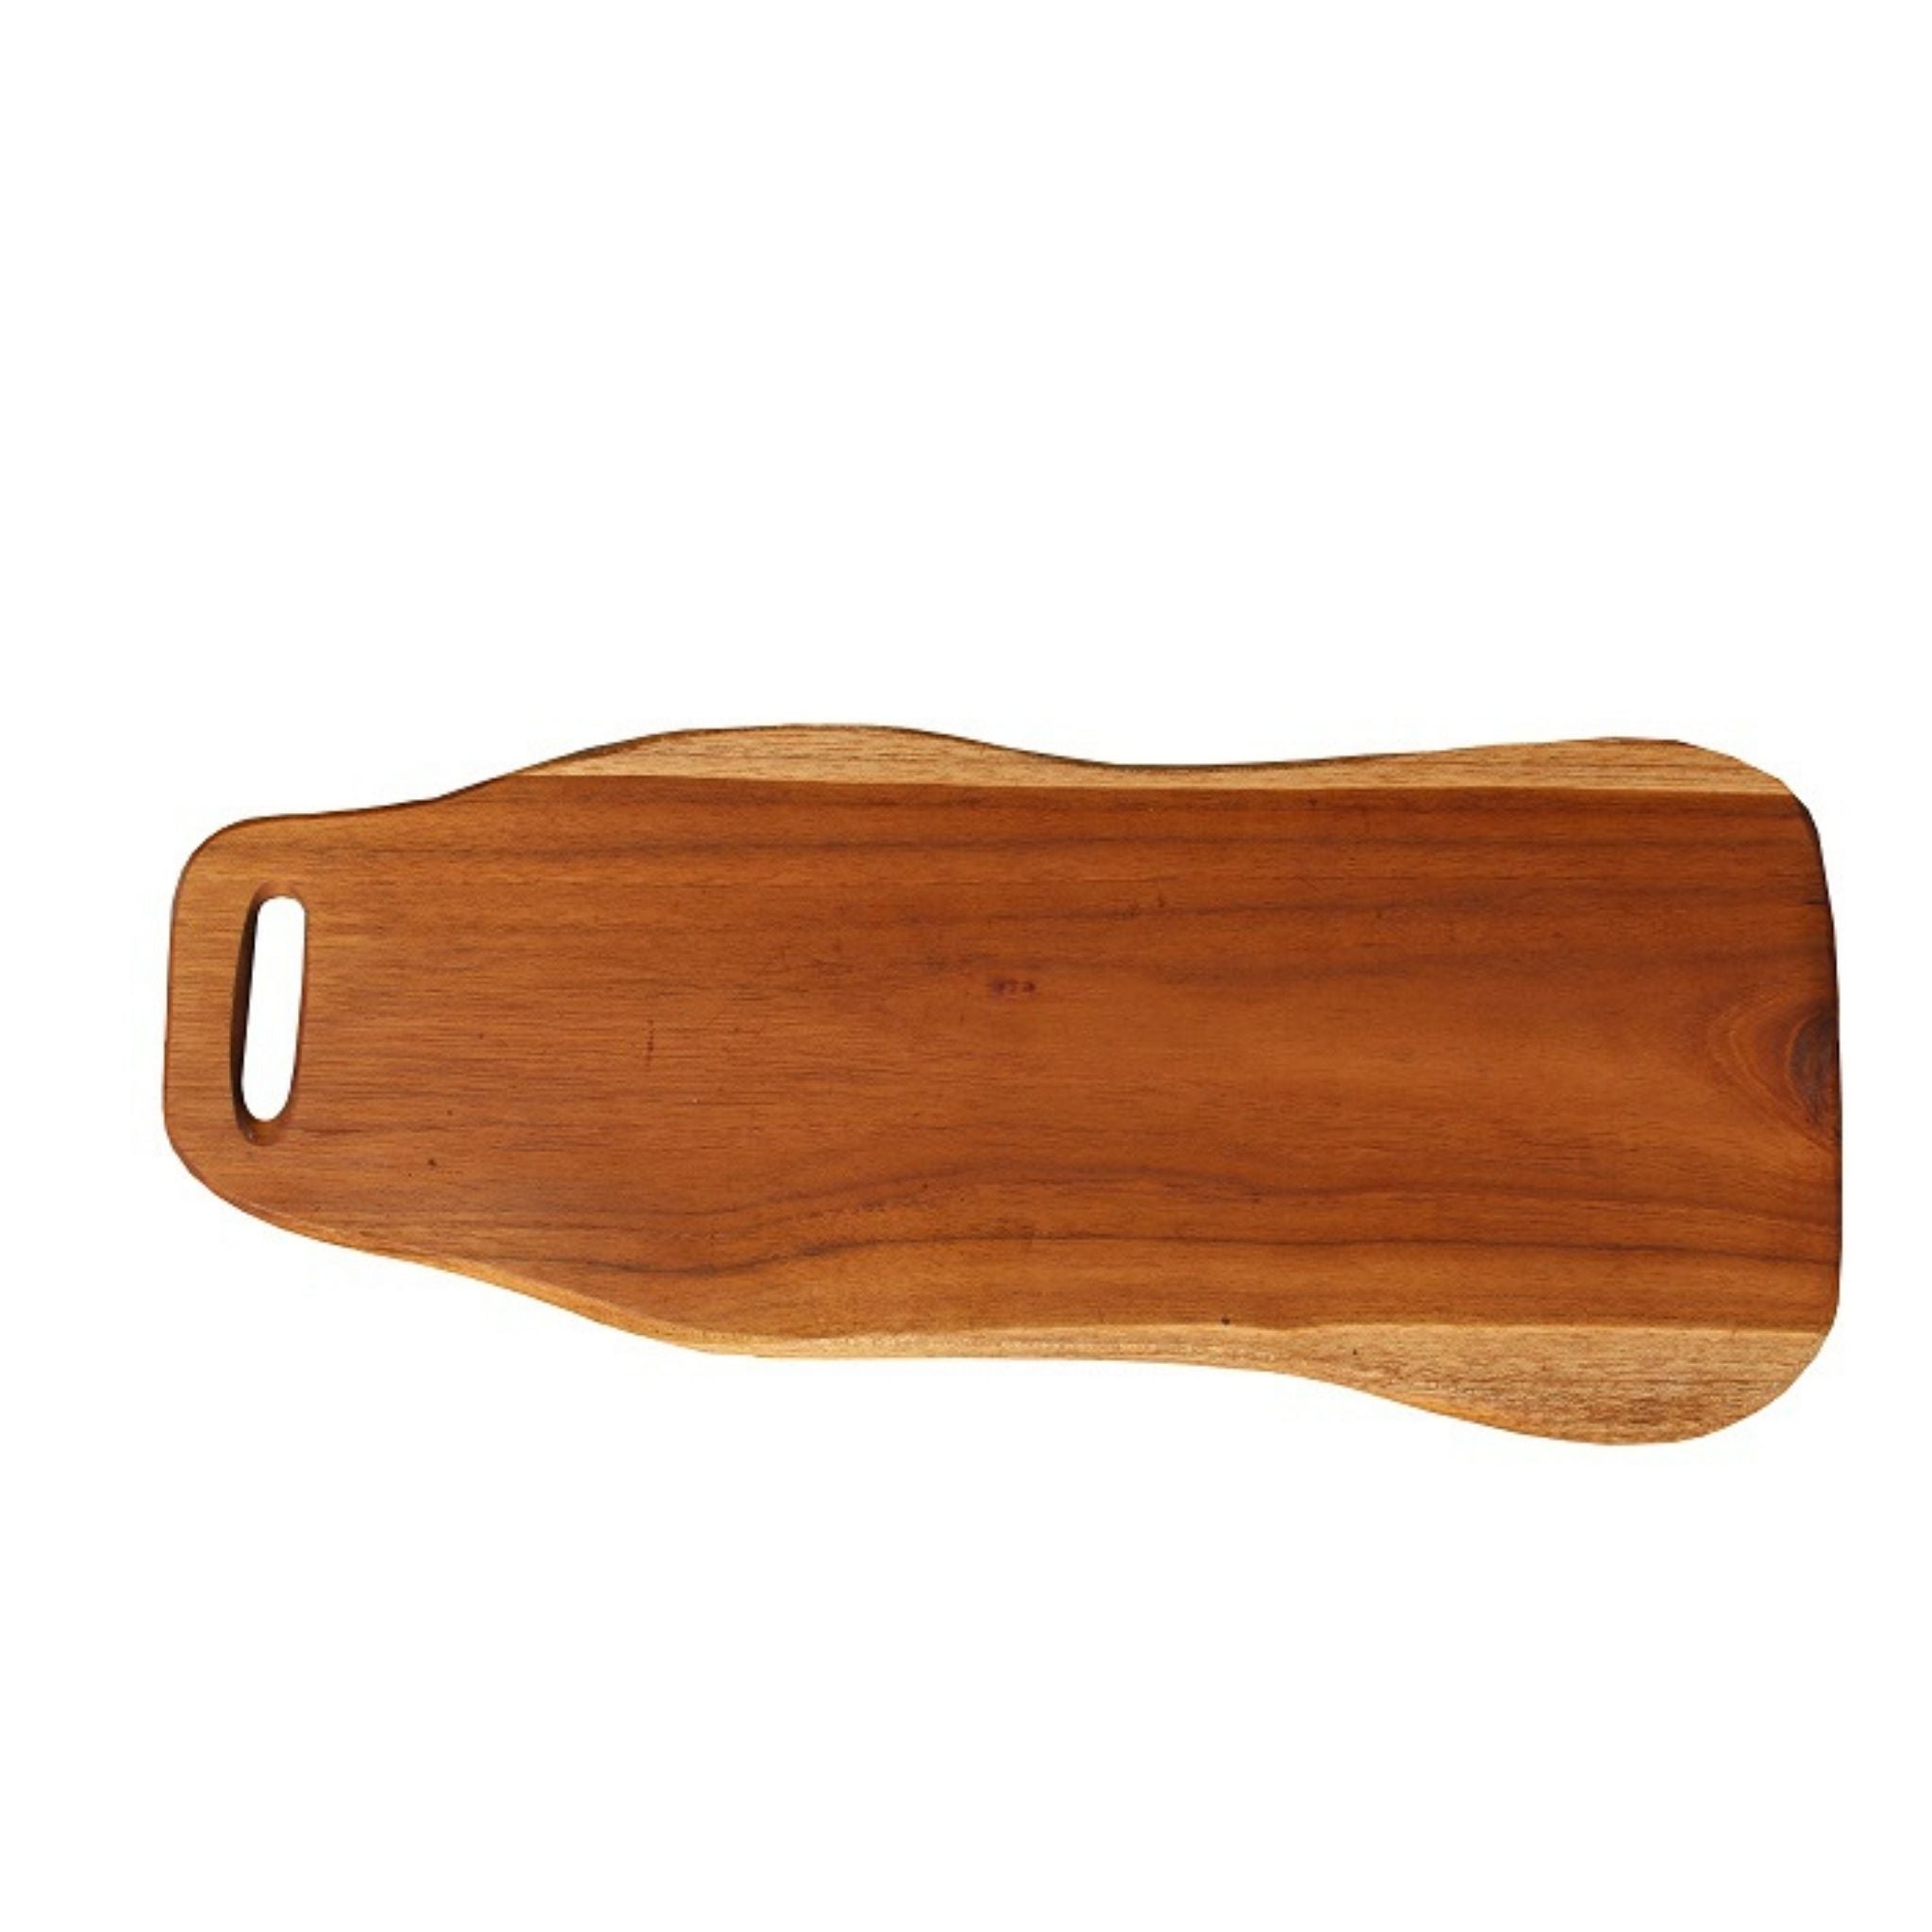 Teak wood Chopping Board Side View